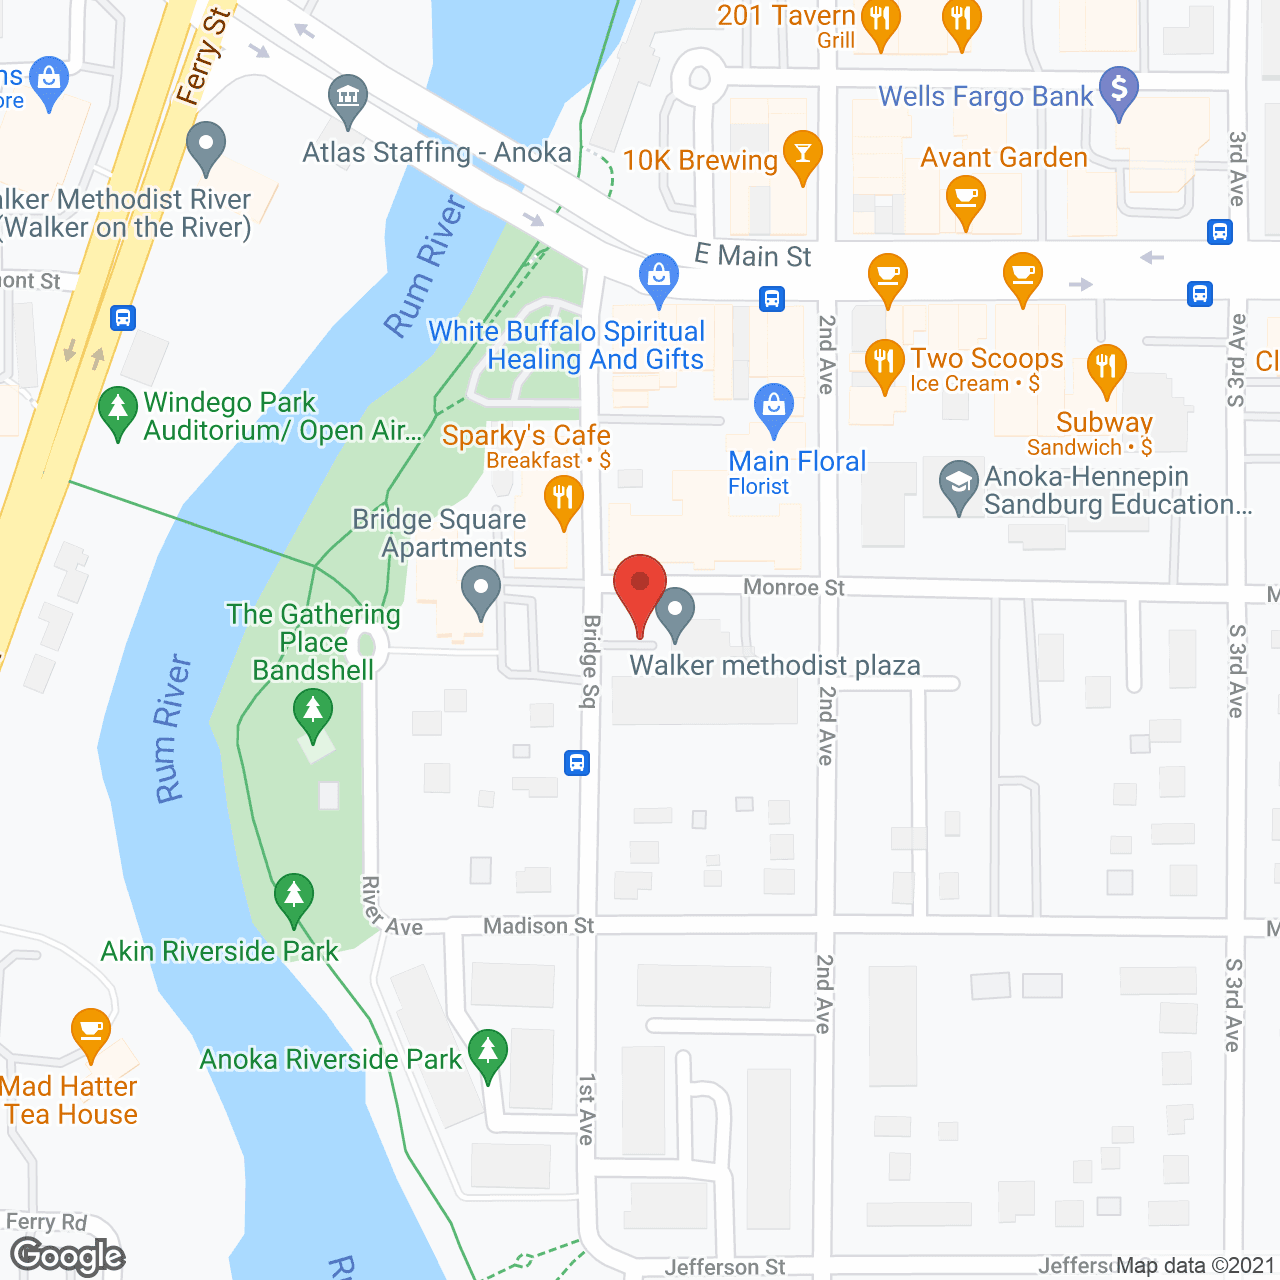 Walker Methodist Plaza in google map